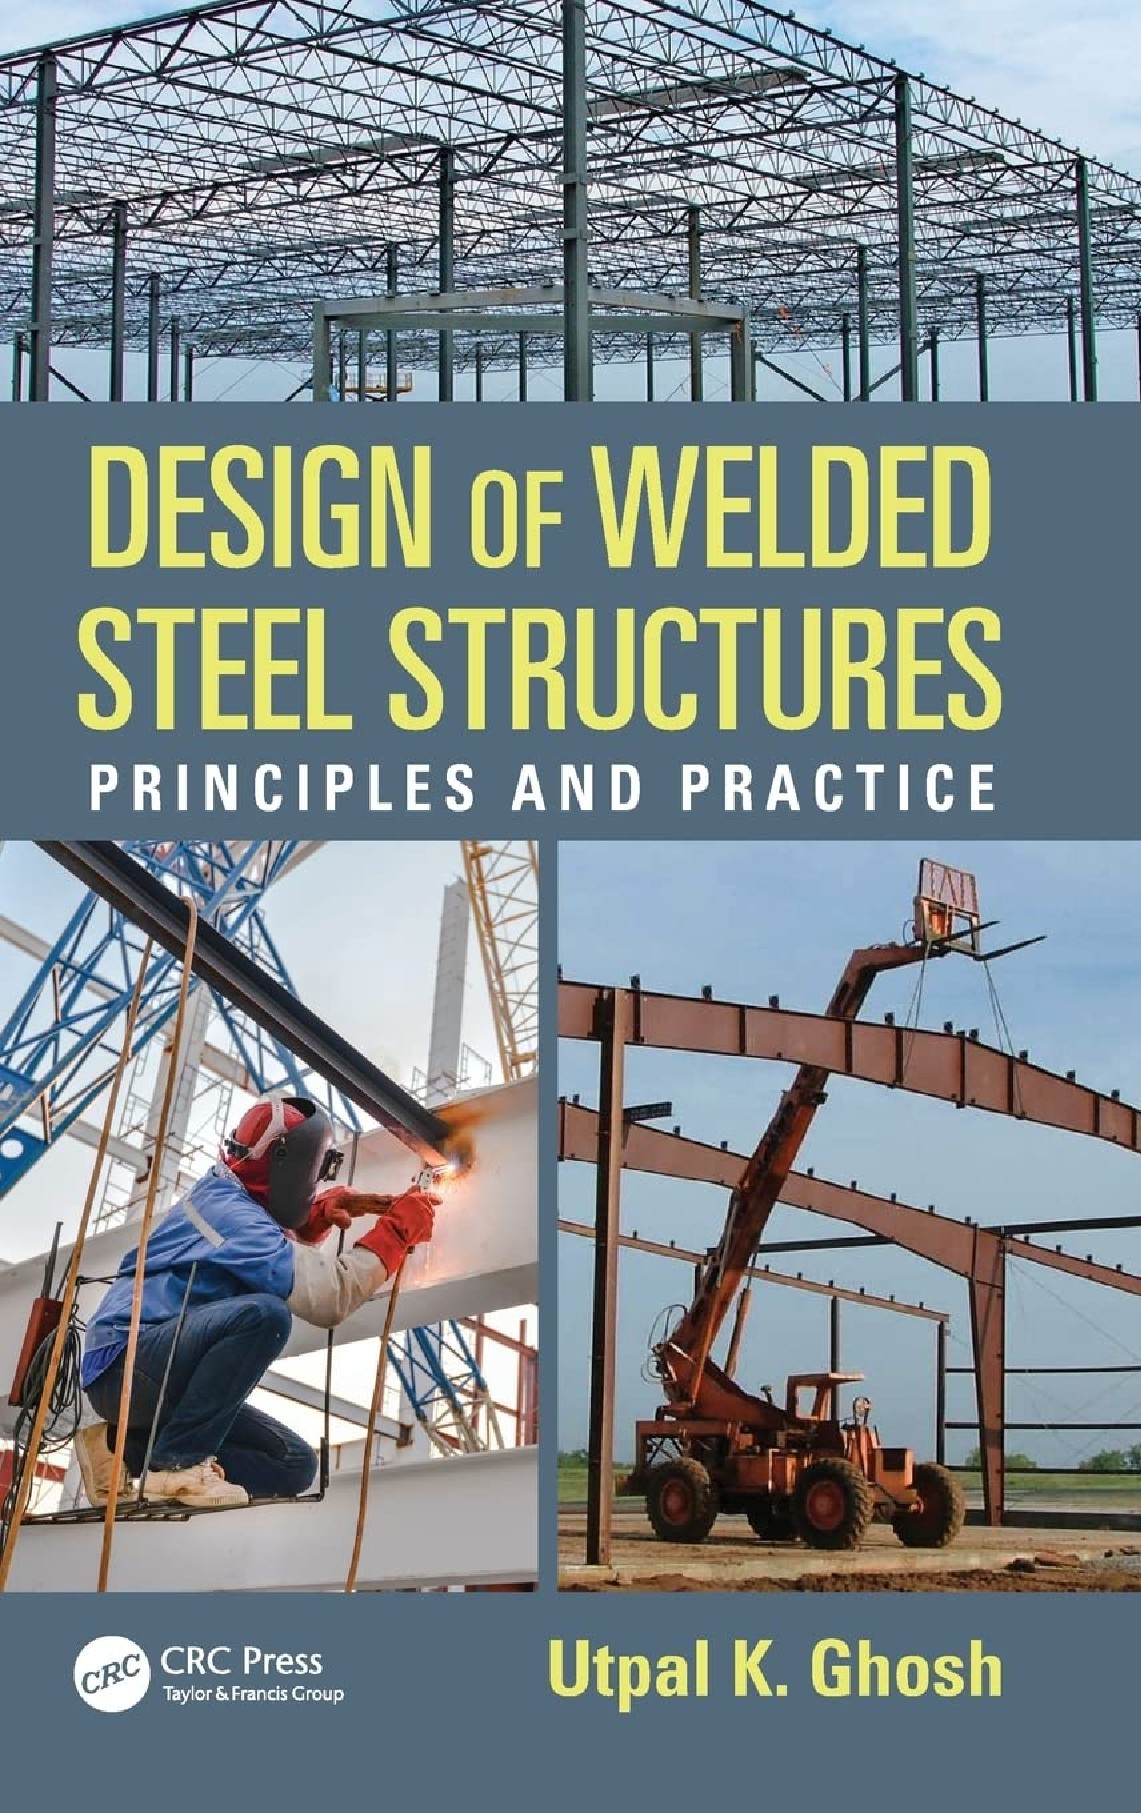 Design of welded steel structures principles and practice (Ghosh, Utpal K)